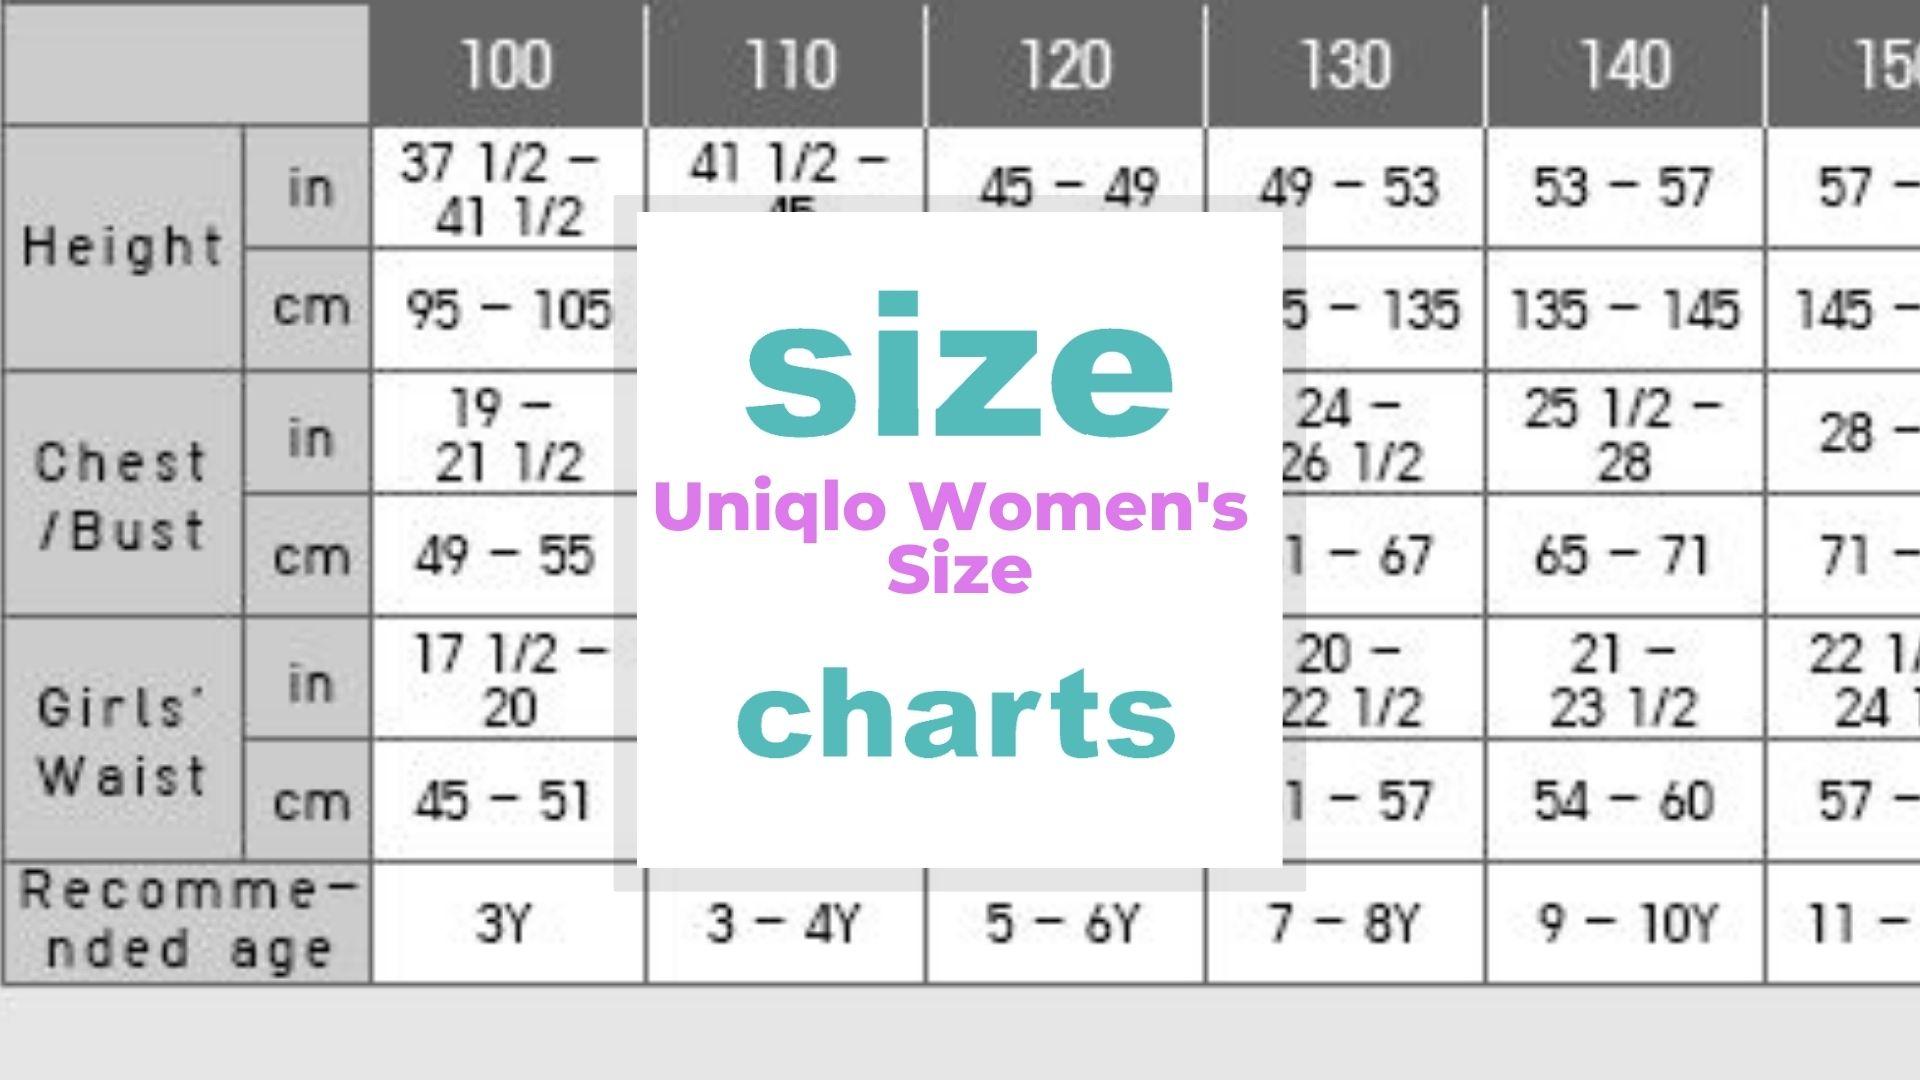 Uniqlo Women's Size Charts - Size-Charts.com